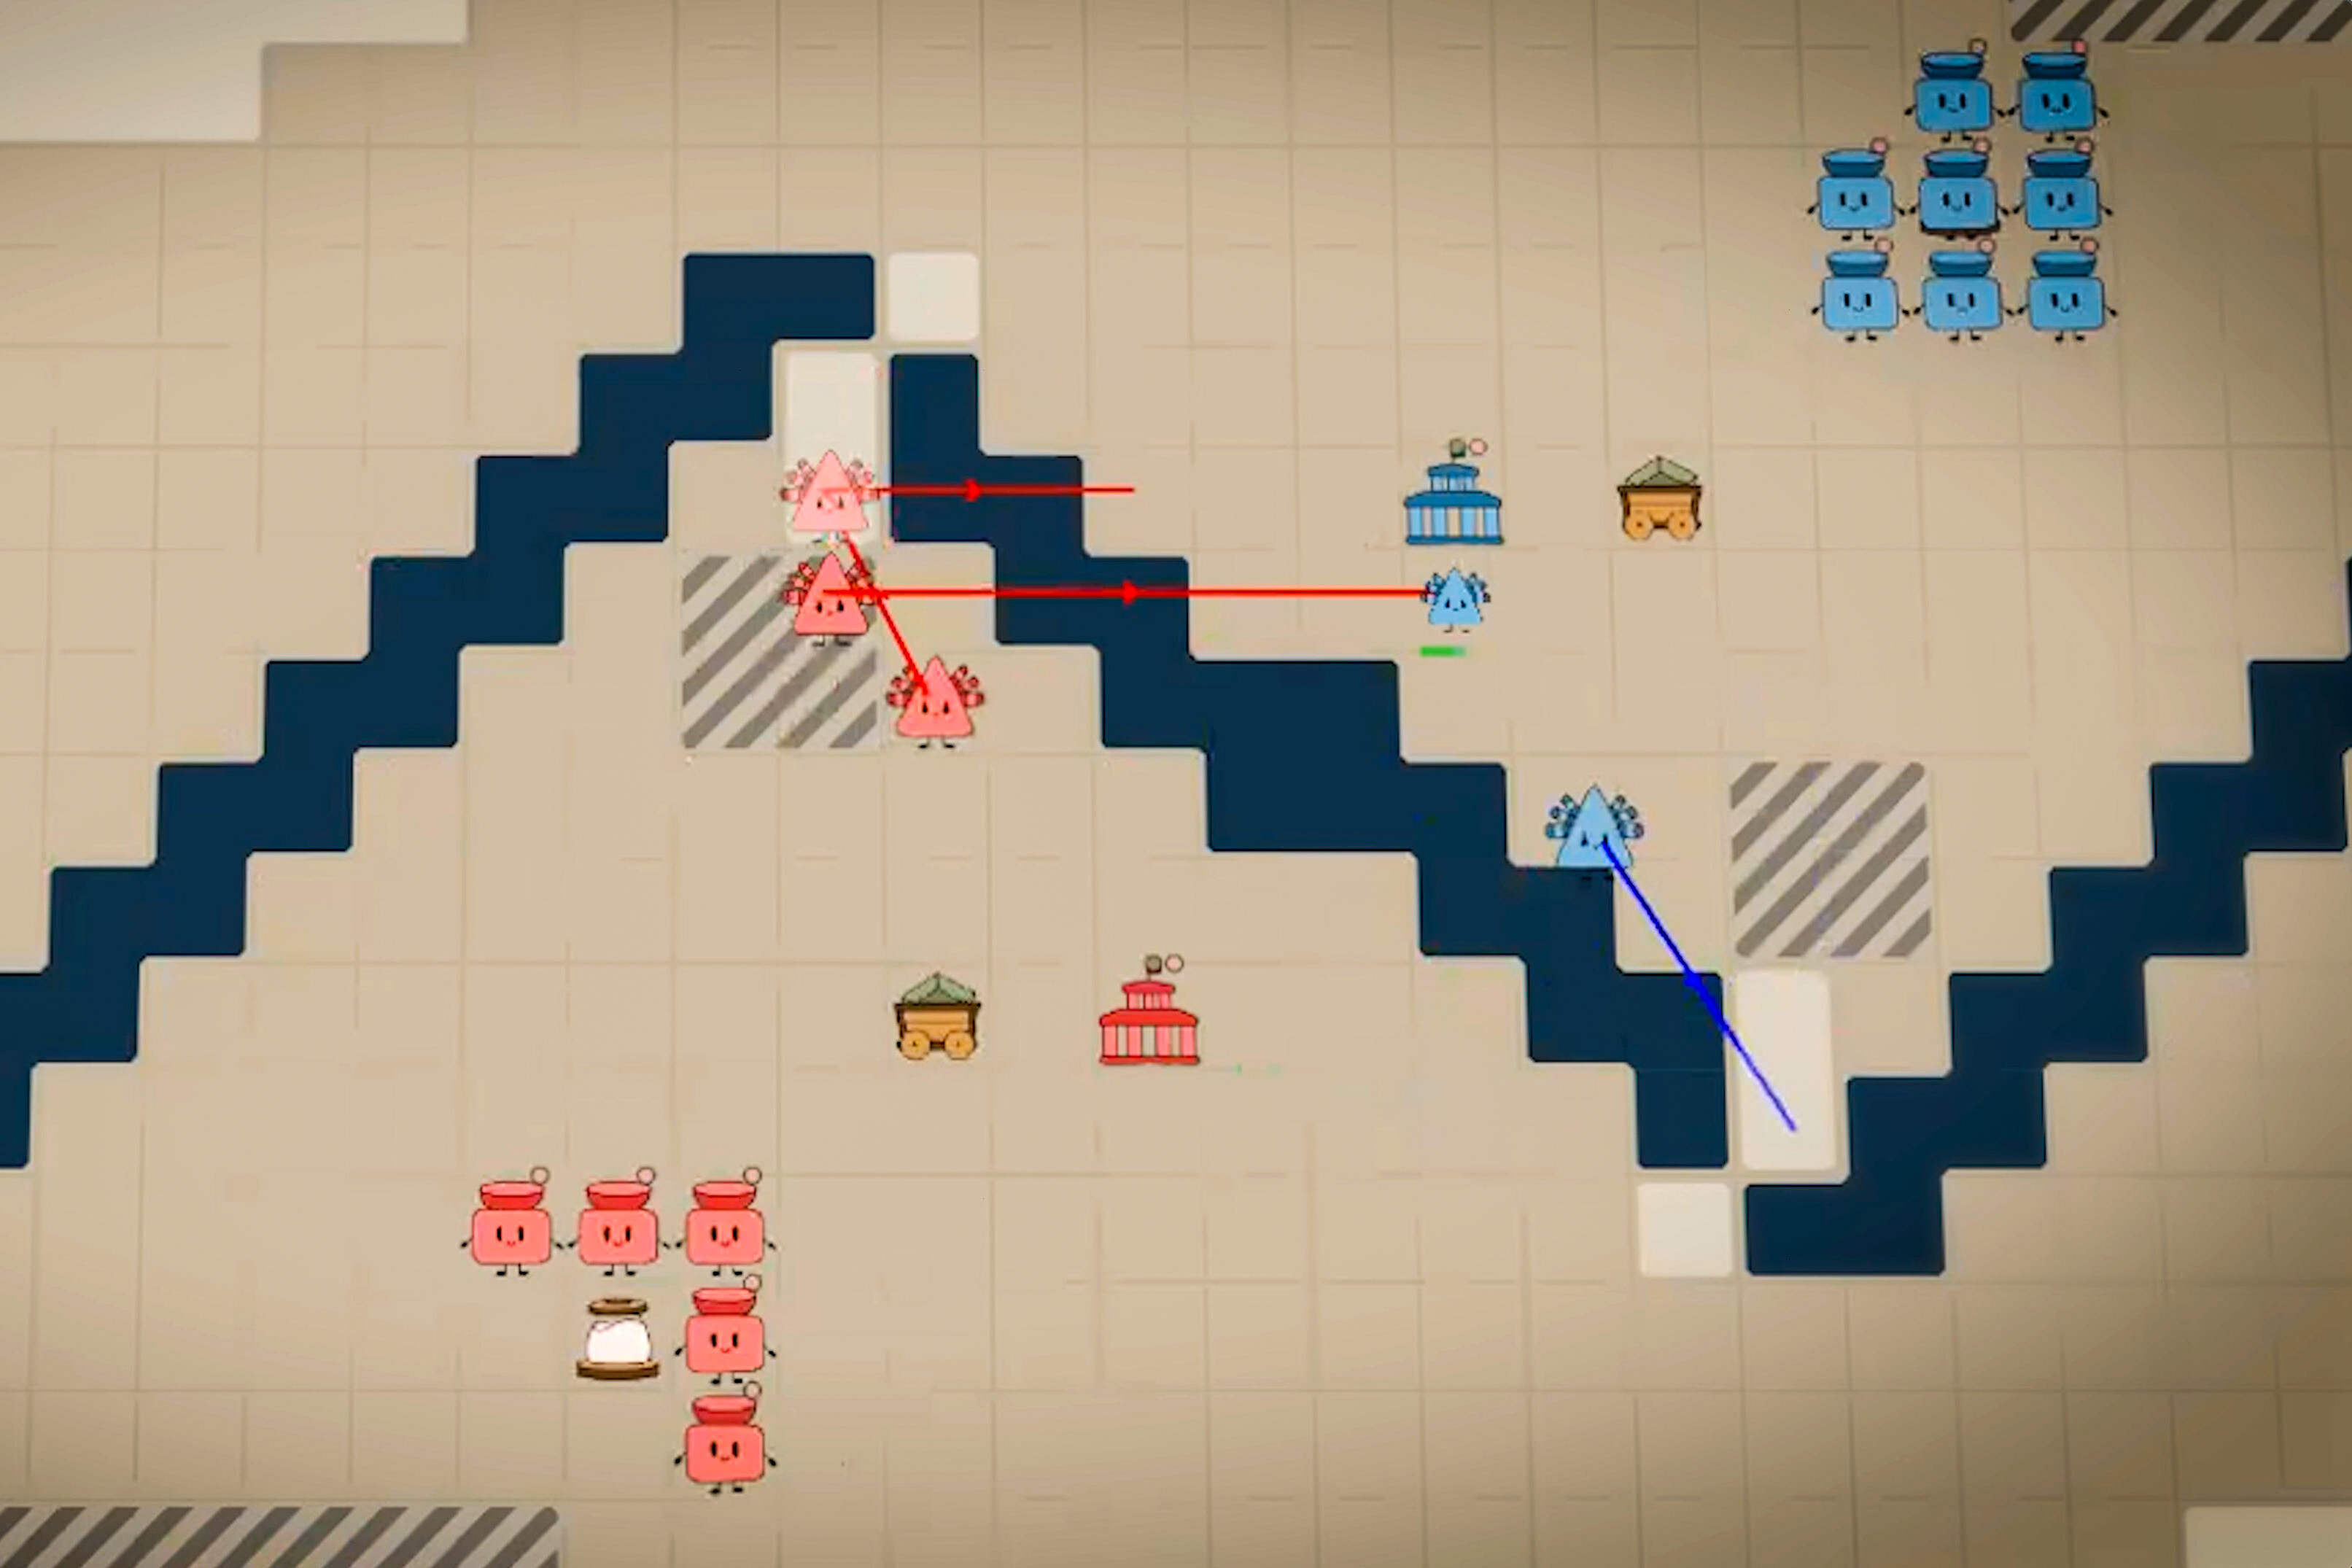 Robot armies duke it out in Battlecode’s epic on-screen battles